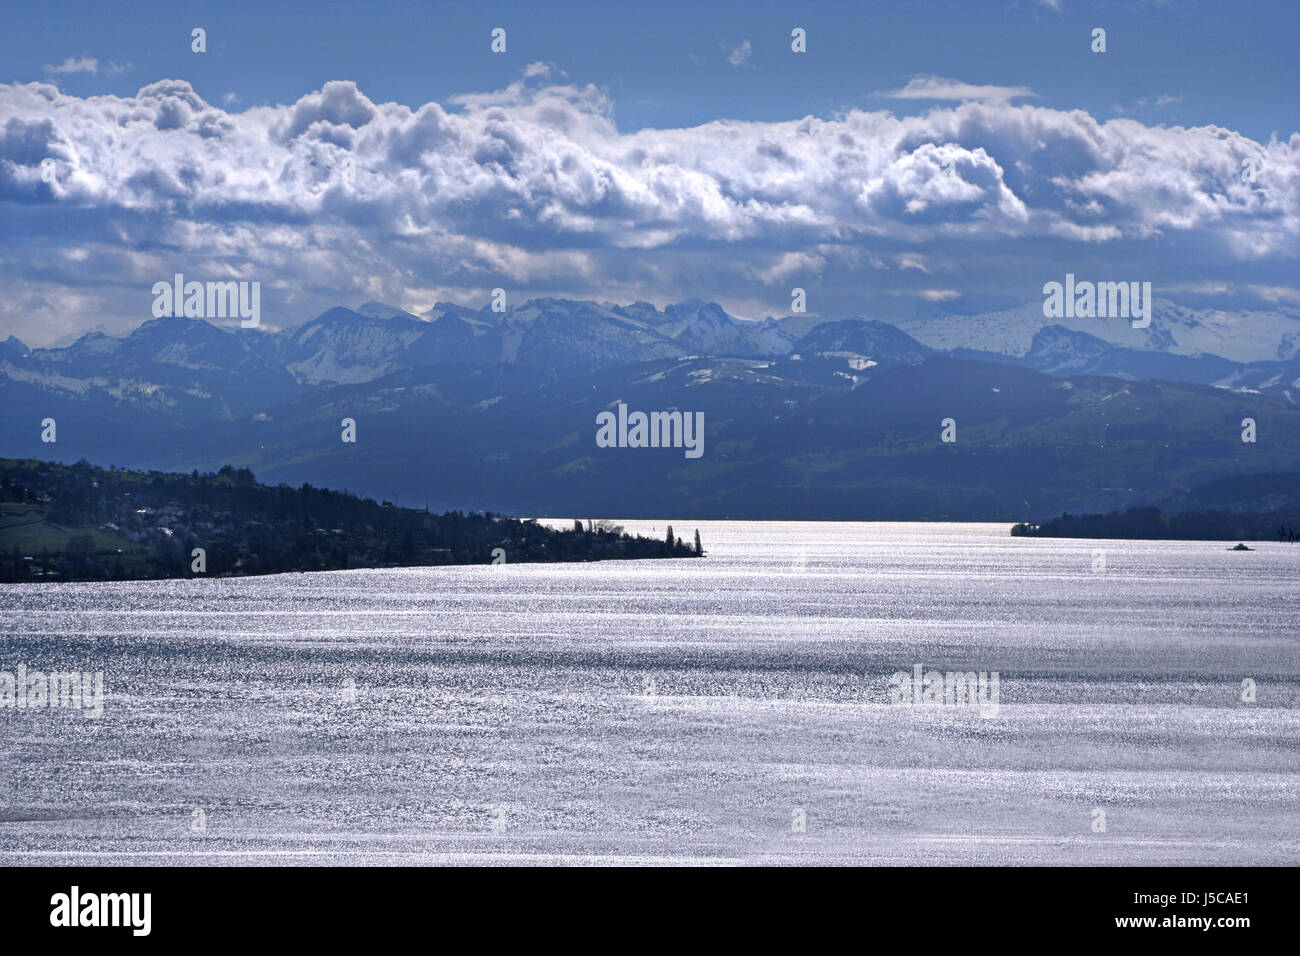 Turismo alpi Zurigo acqua salata oceano mare nuvole d'acqua meteo montagne blu Foto Stock